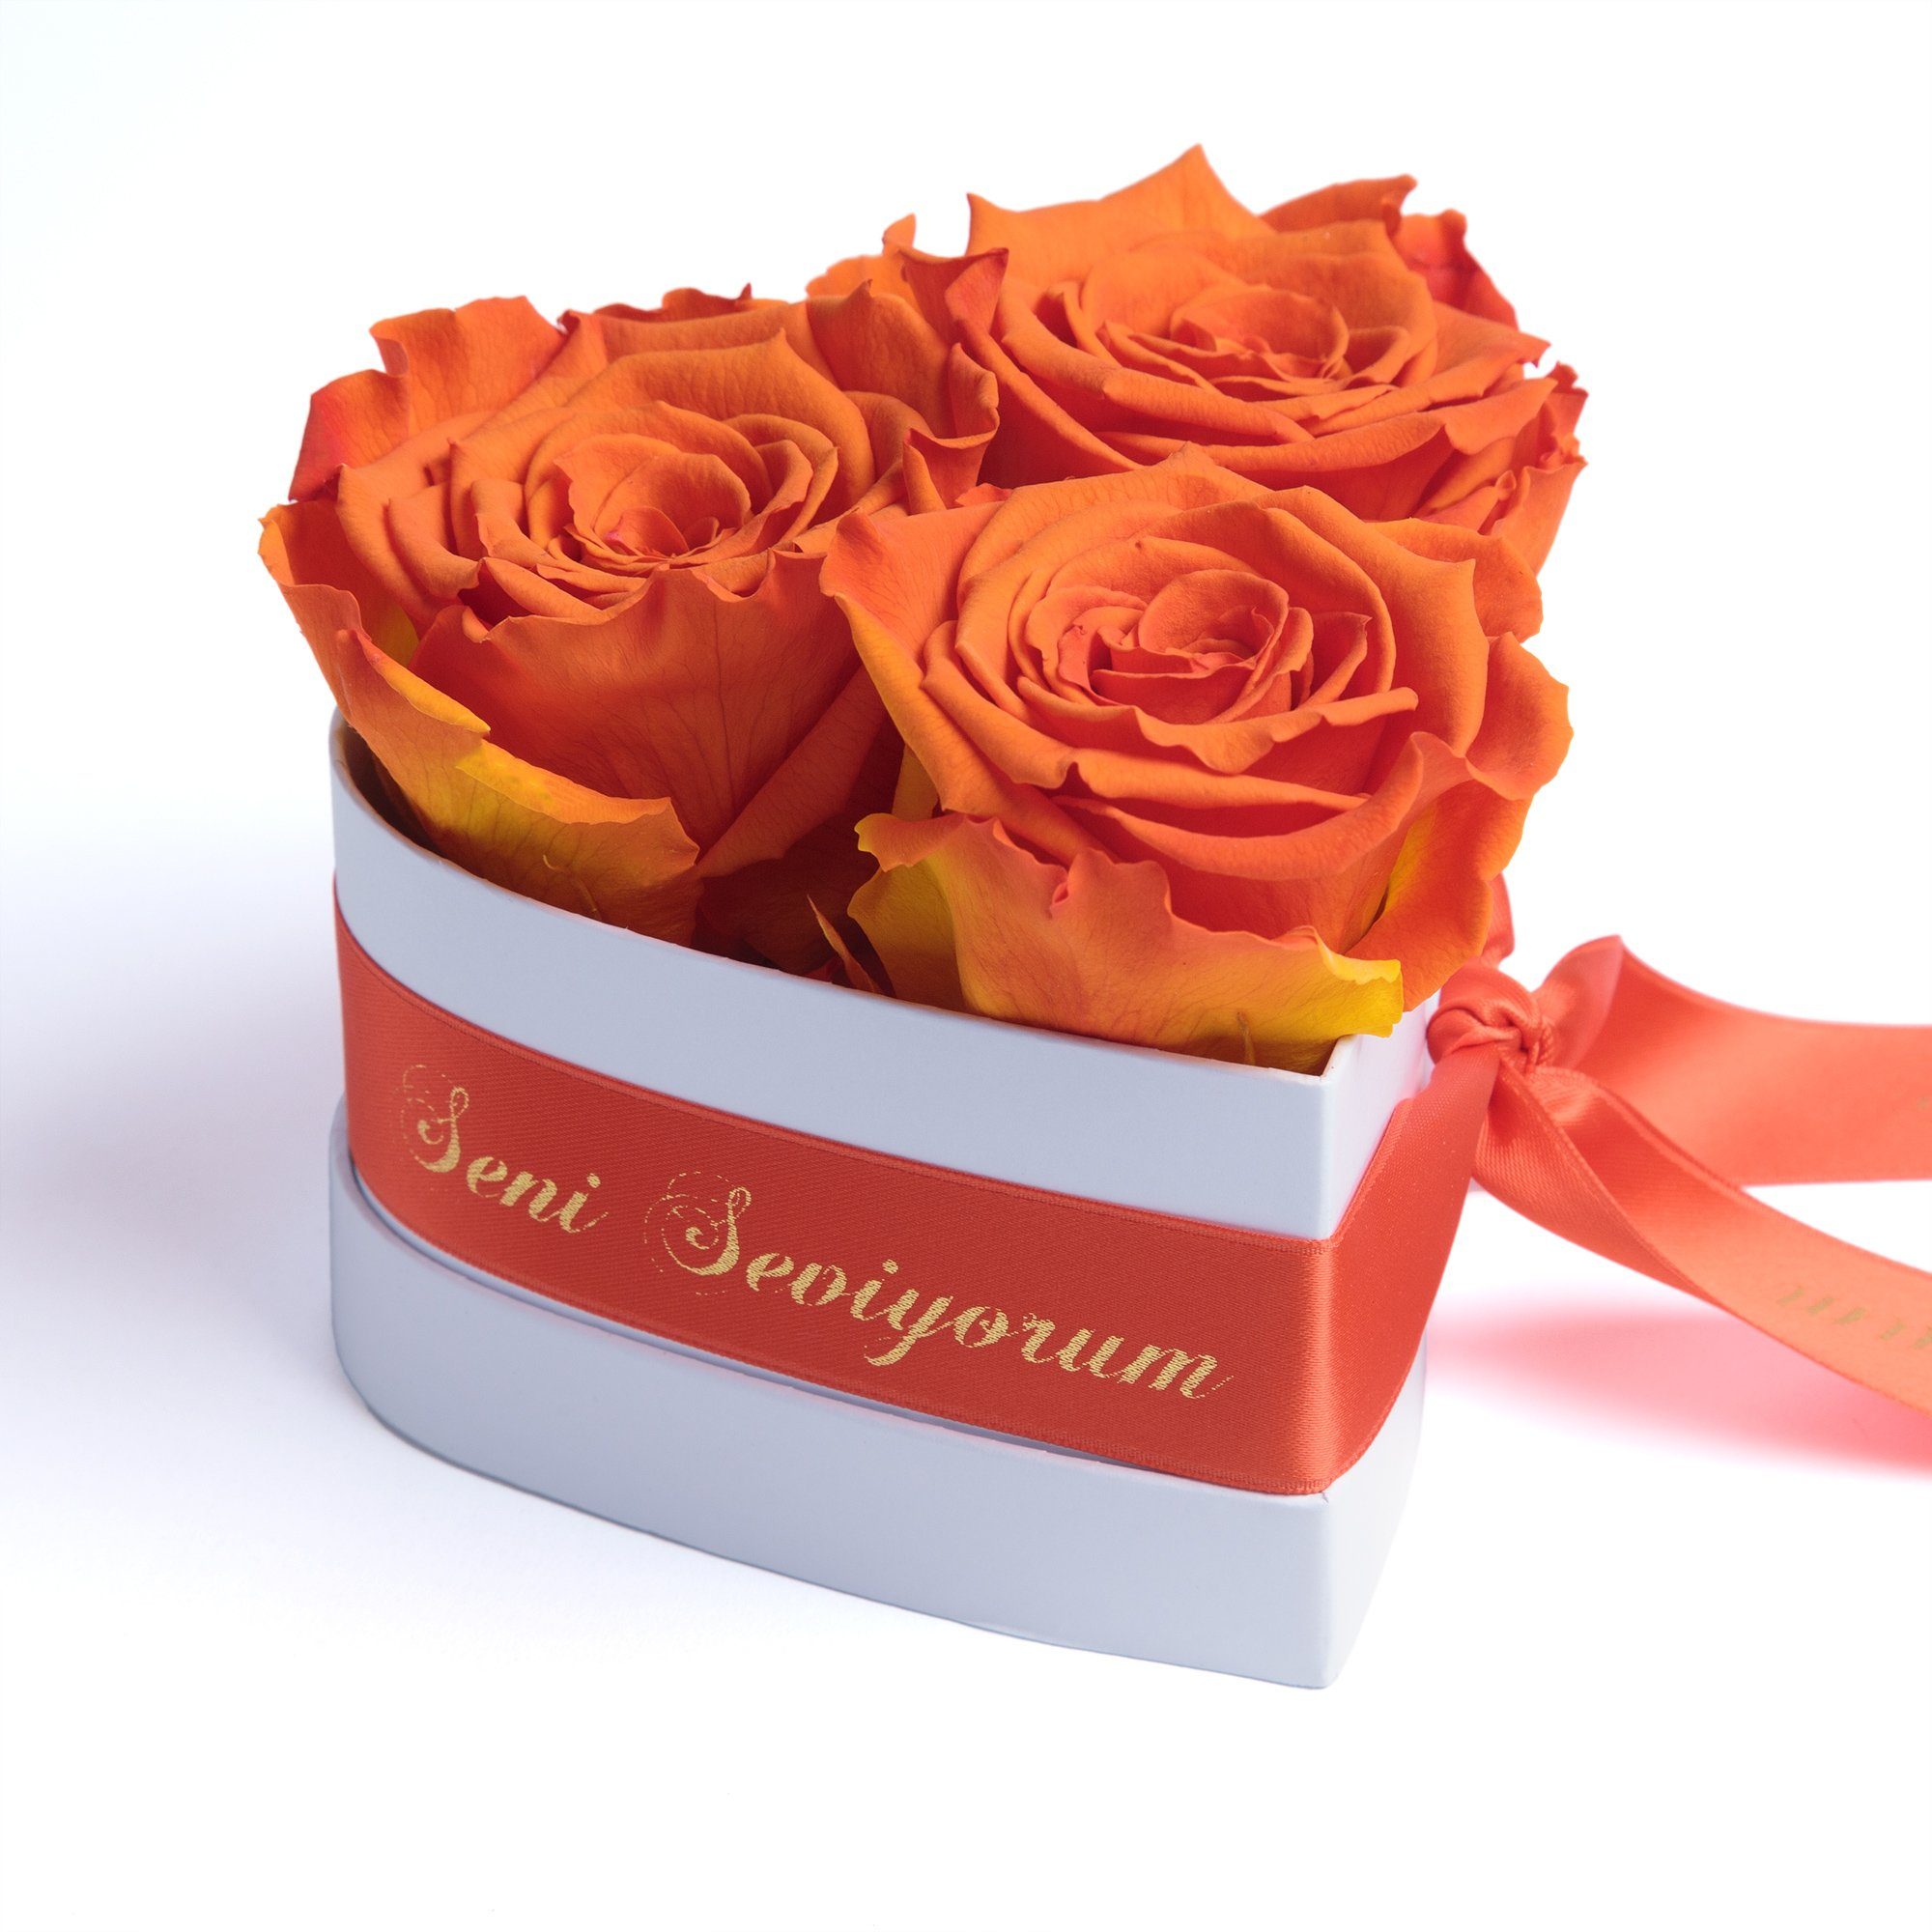 Kunstblume Seni Seviyorum Infinity Rosenbox Herz 3 echte Rosen konserviert Rose, ROSEMARIE SCHULZ Heidelberg, Höhe 10 cm, echte Rosen lang haltbar Orange